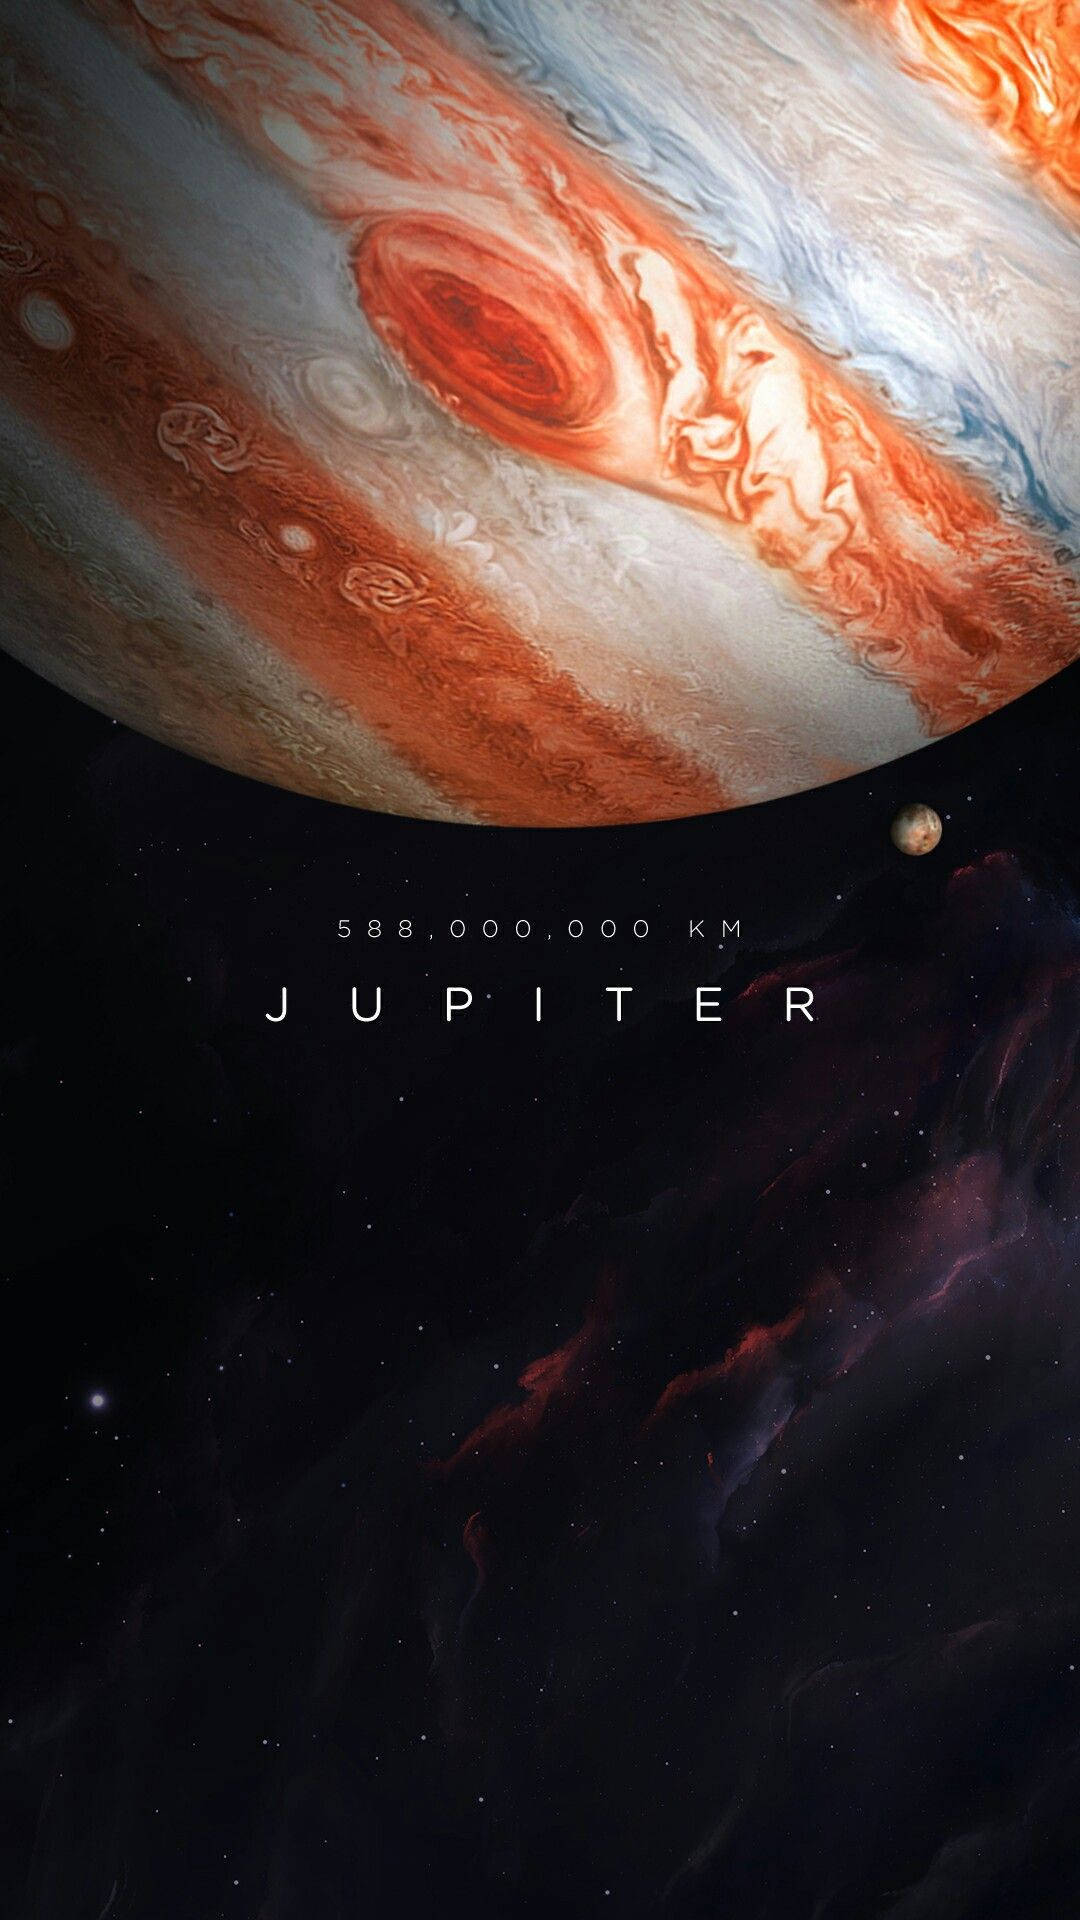 Jupiter Informational Poster Wallpaper